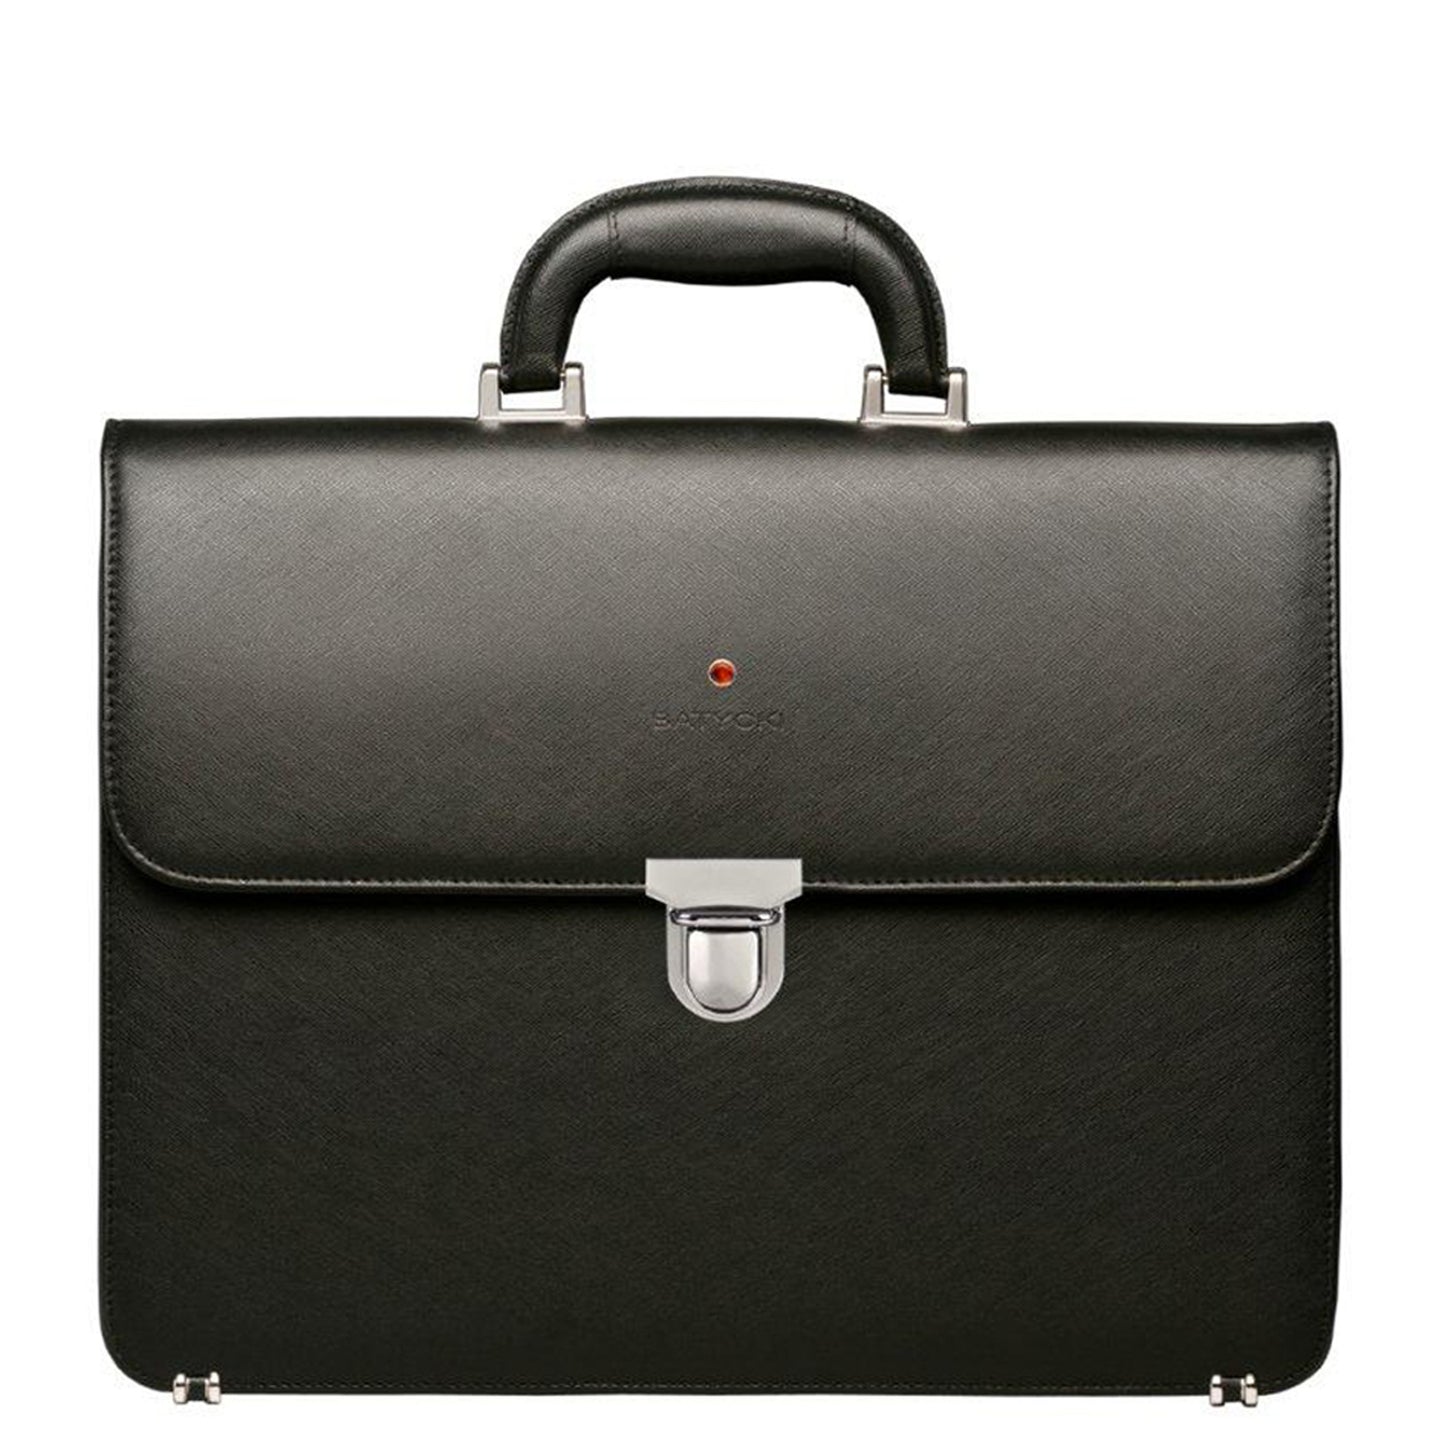 S artico black leather business briefcase